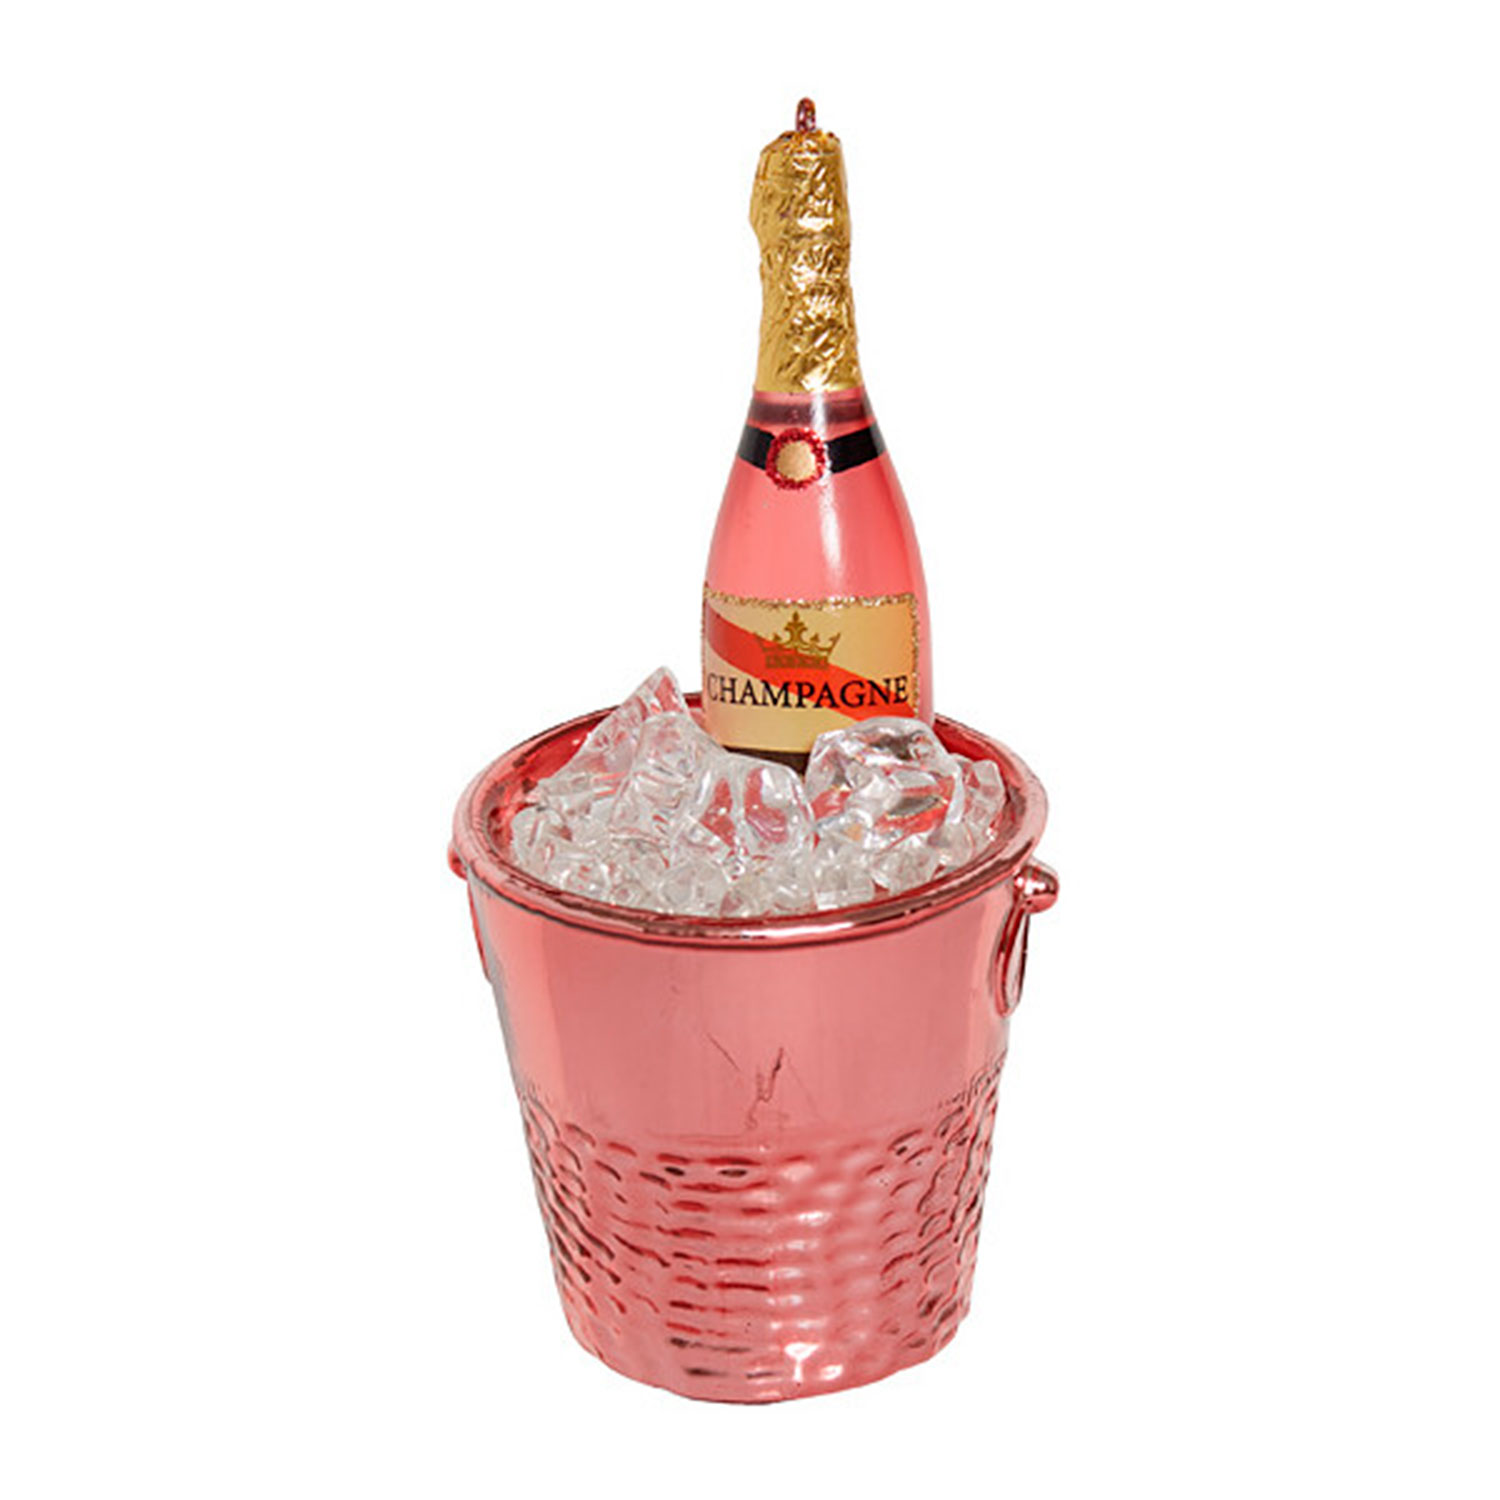 Шампанского саратов. Подвеска на шампанское. Шампанское и розы. Шампанское и розы фигурка. Елочная игрушка Champagne розовая бутылка.